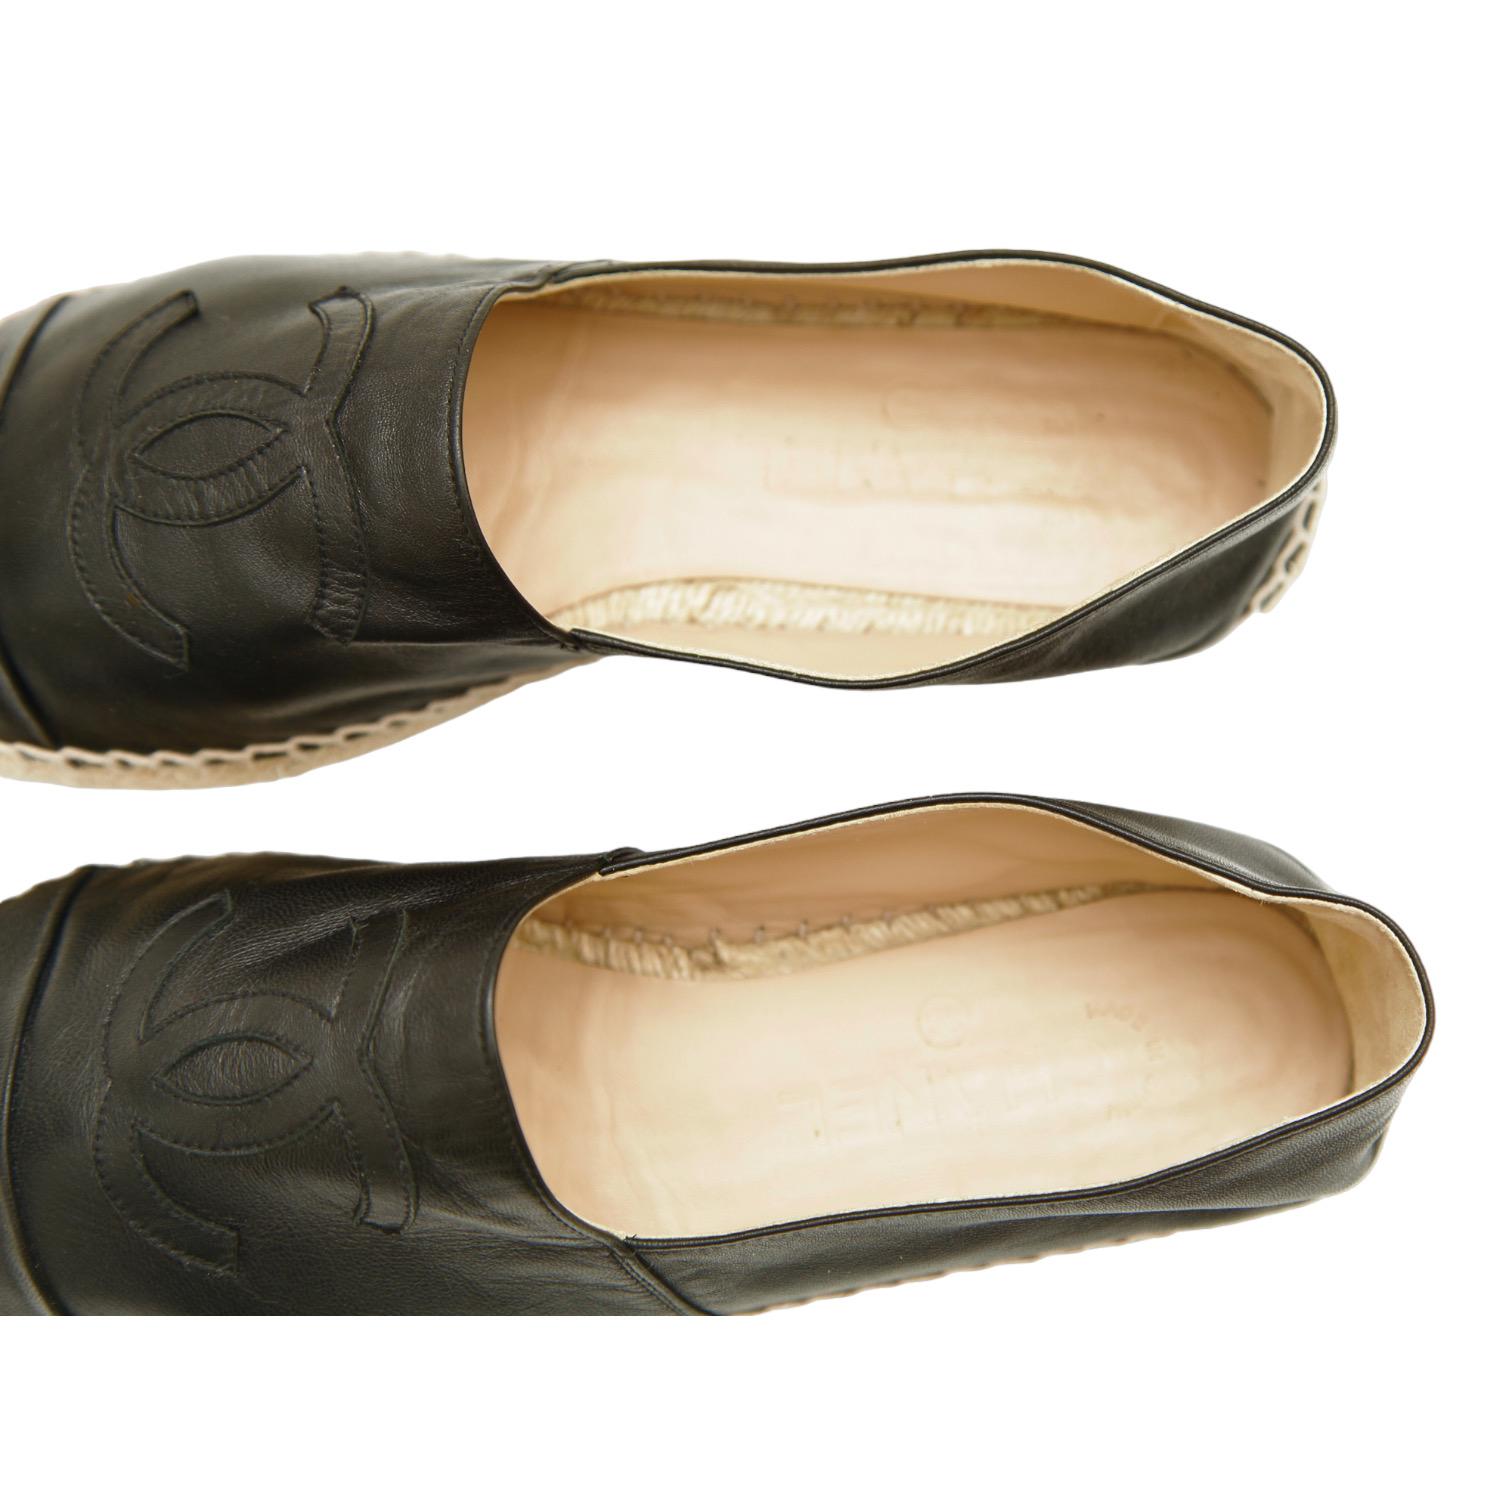 CHANEL Black Lambskin Leather Espadrilles Loafers Flats Cap Toe CC Shoes Sz 40 2